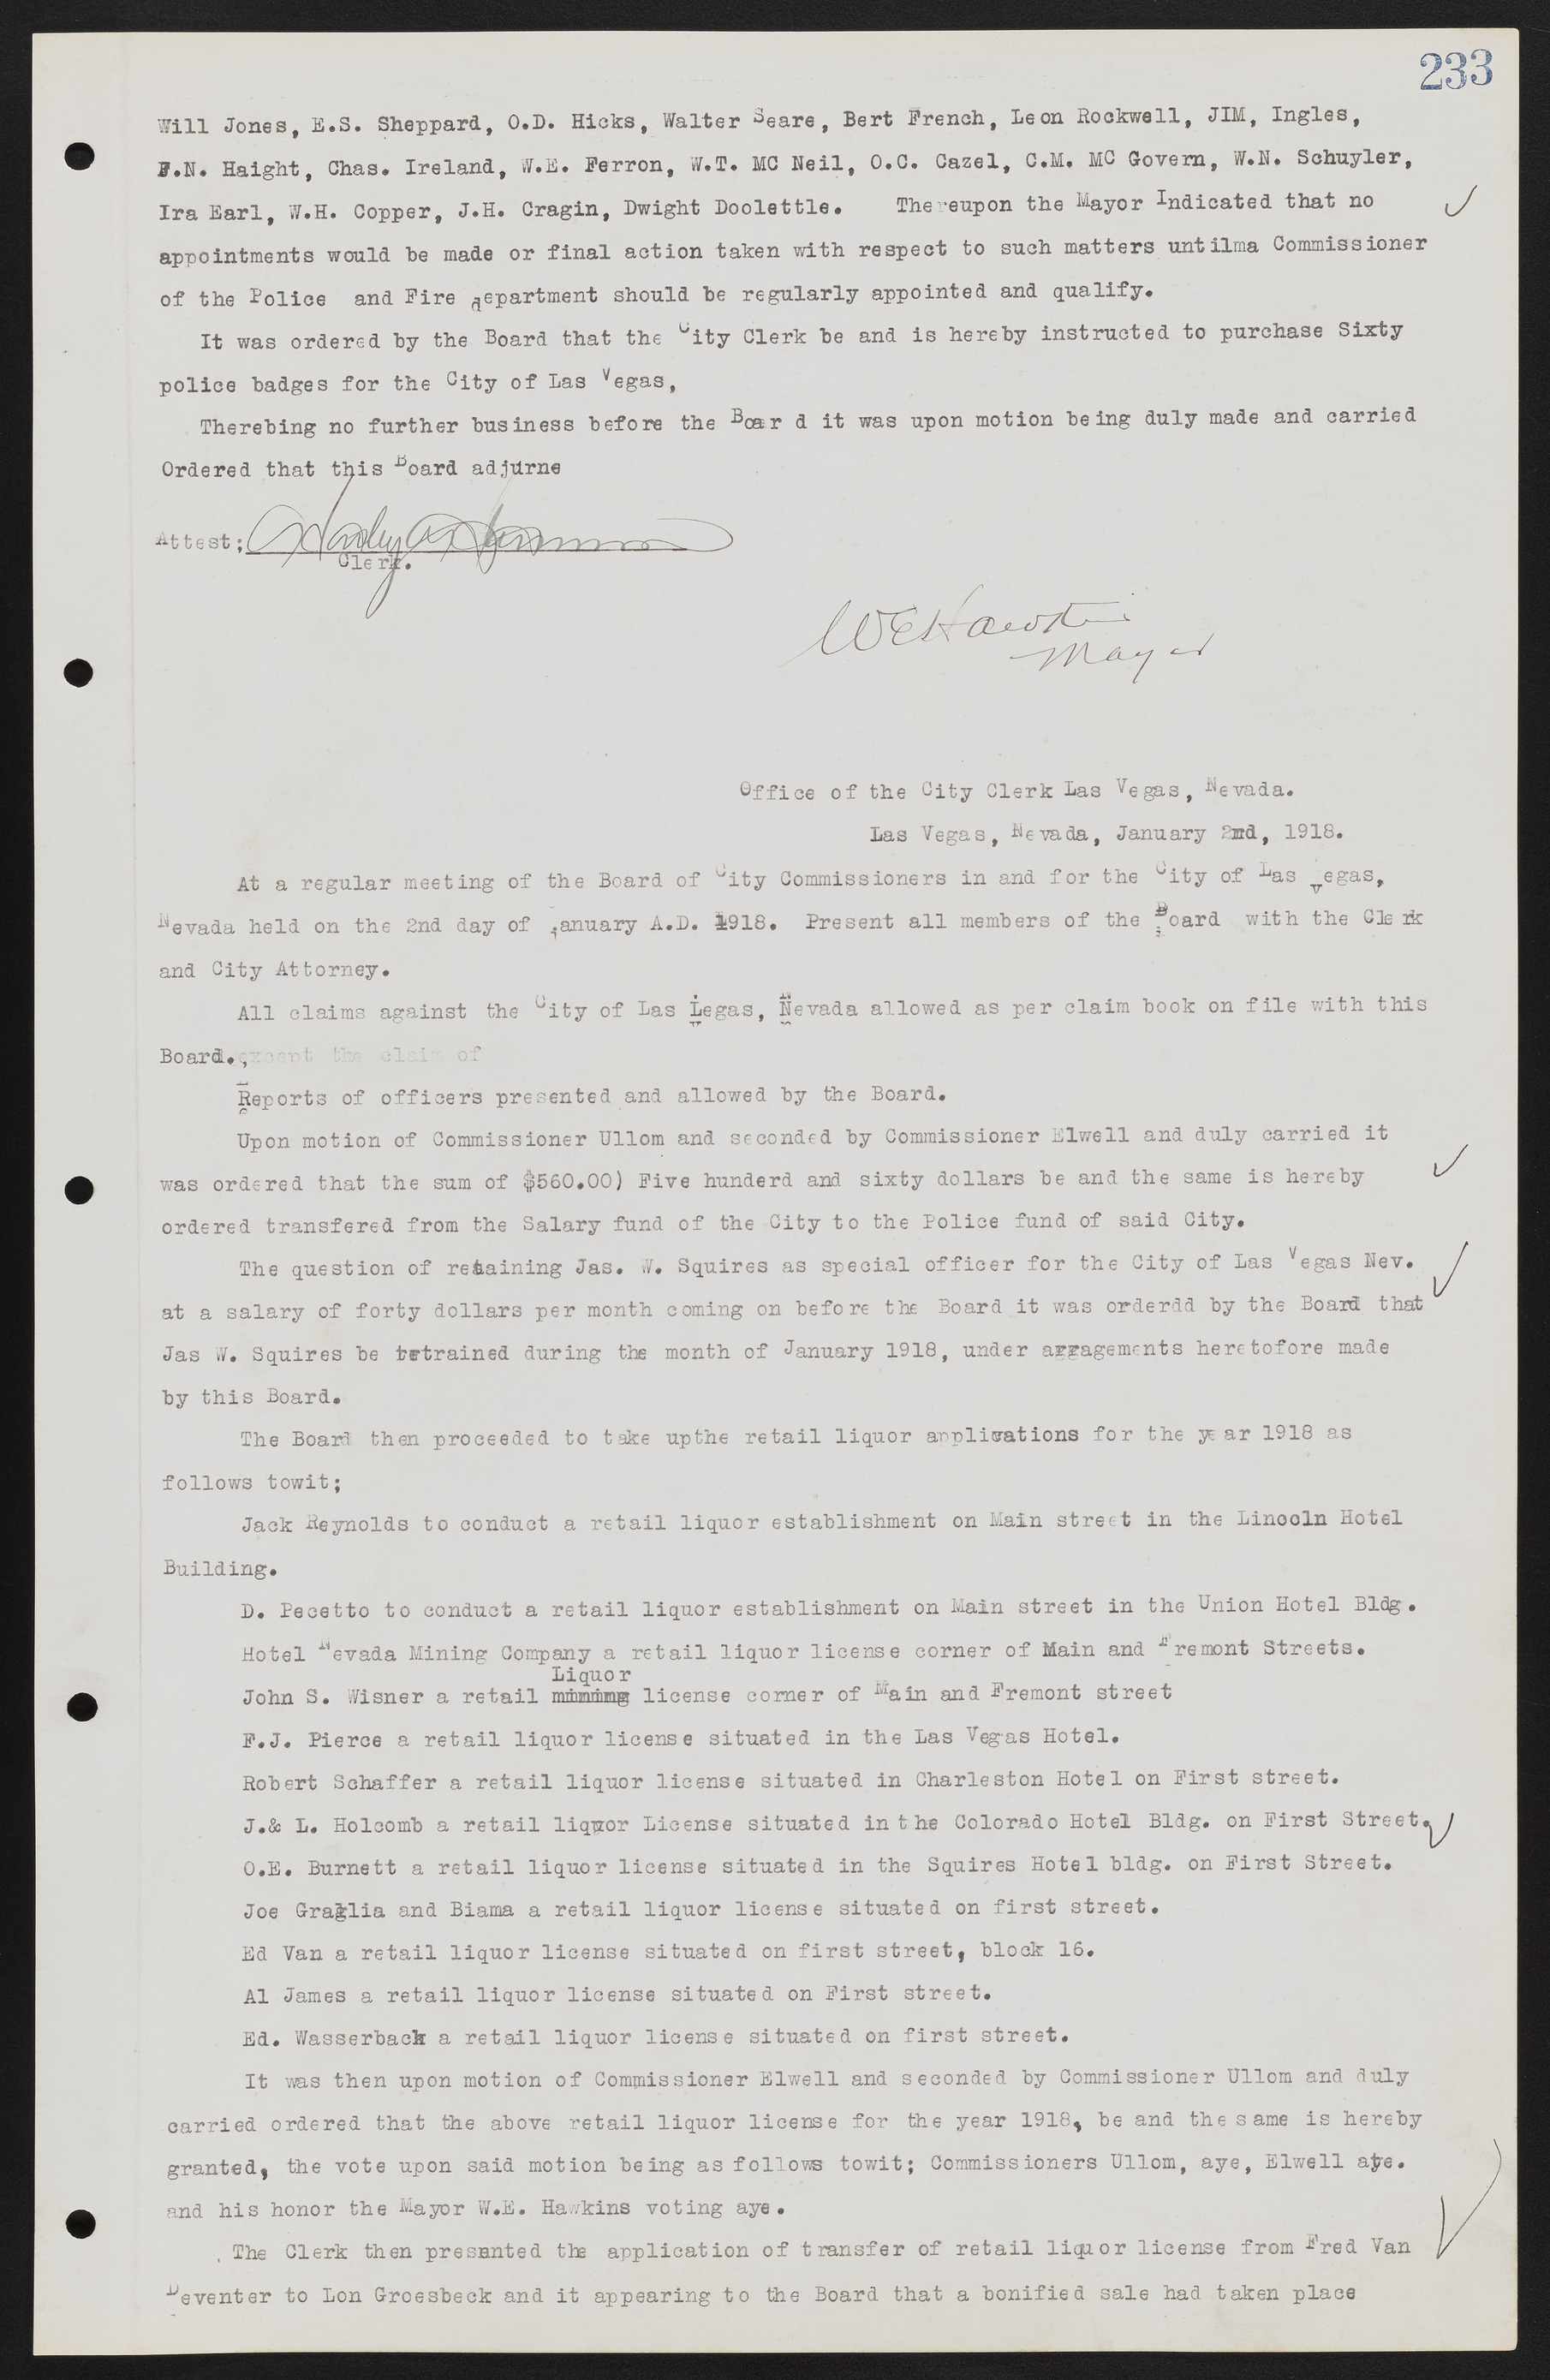 Las Vegas City Commission Minutes, June 22, 1911 to February 7, 1922, lvc000001-249